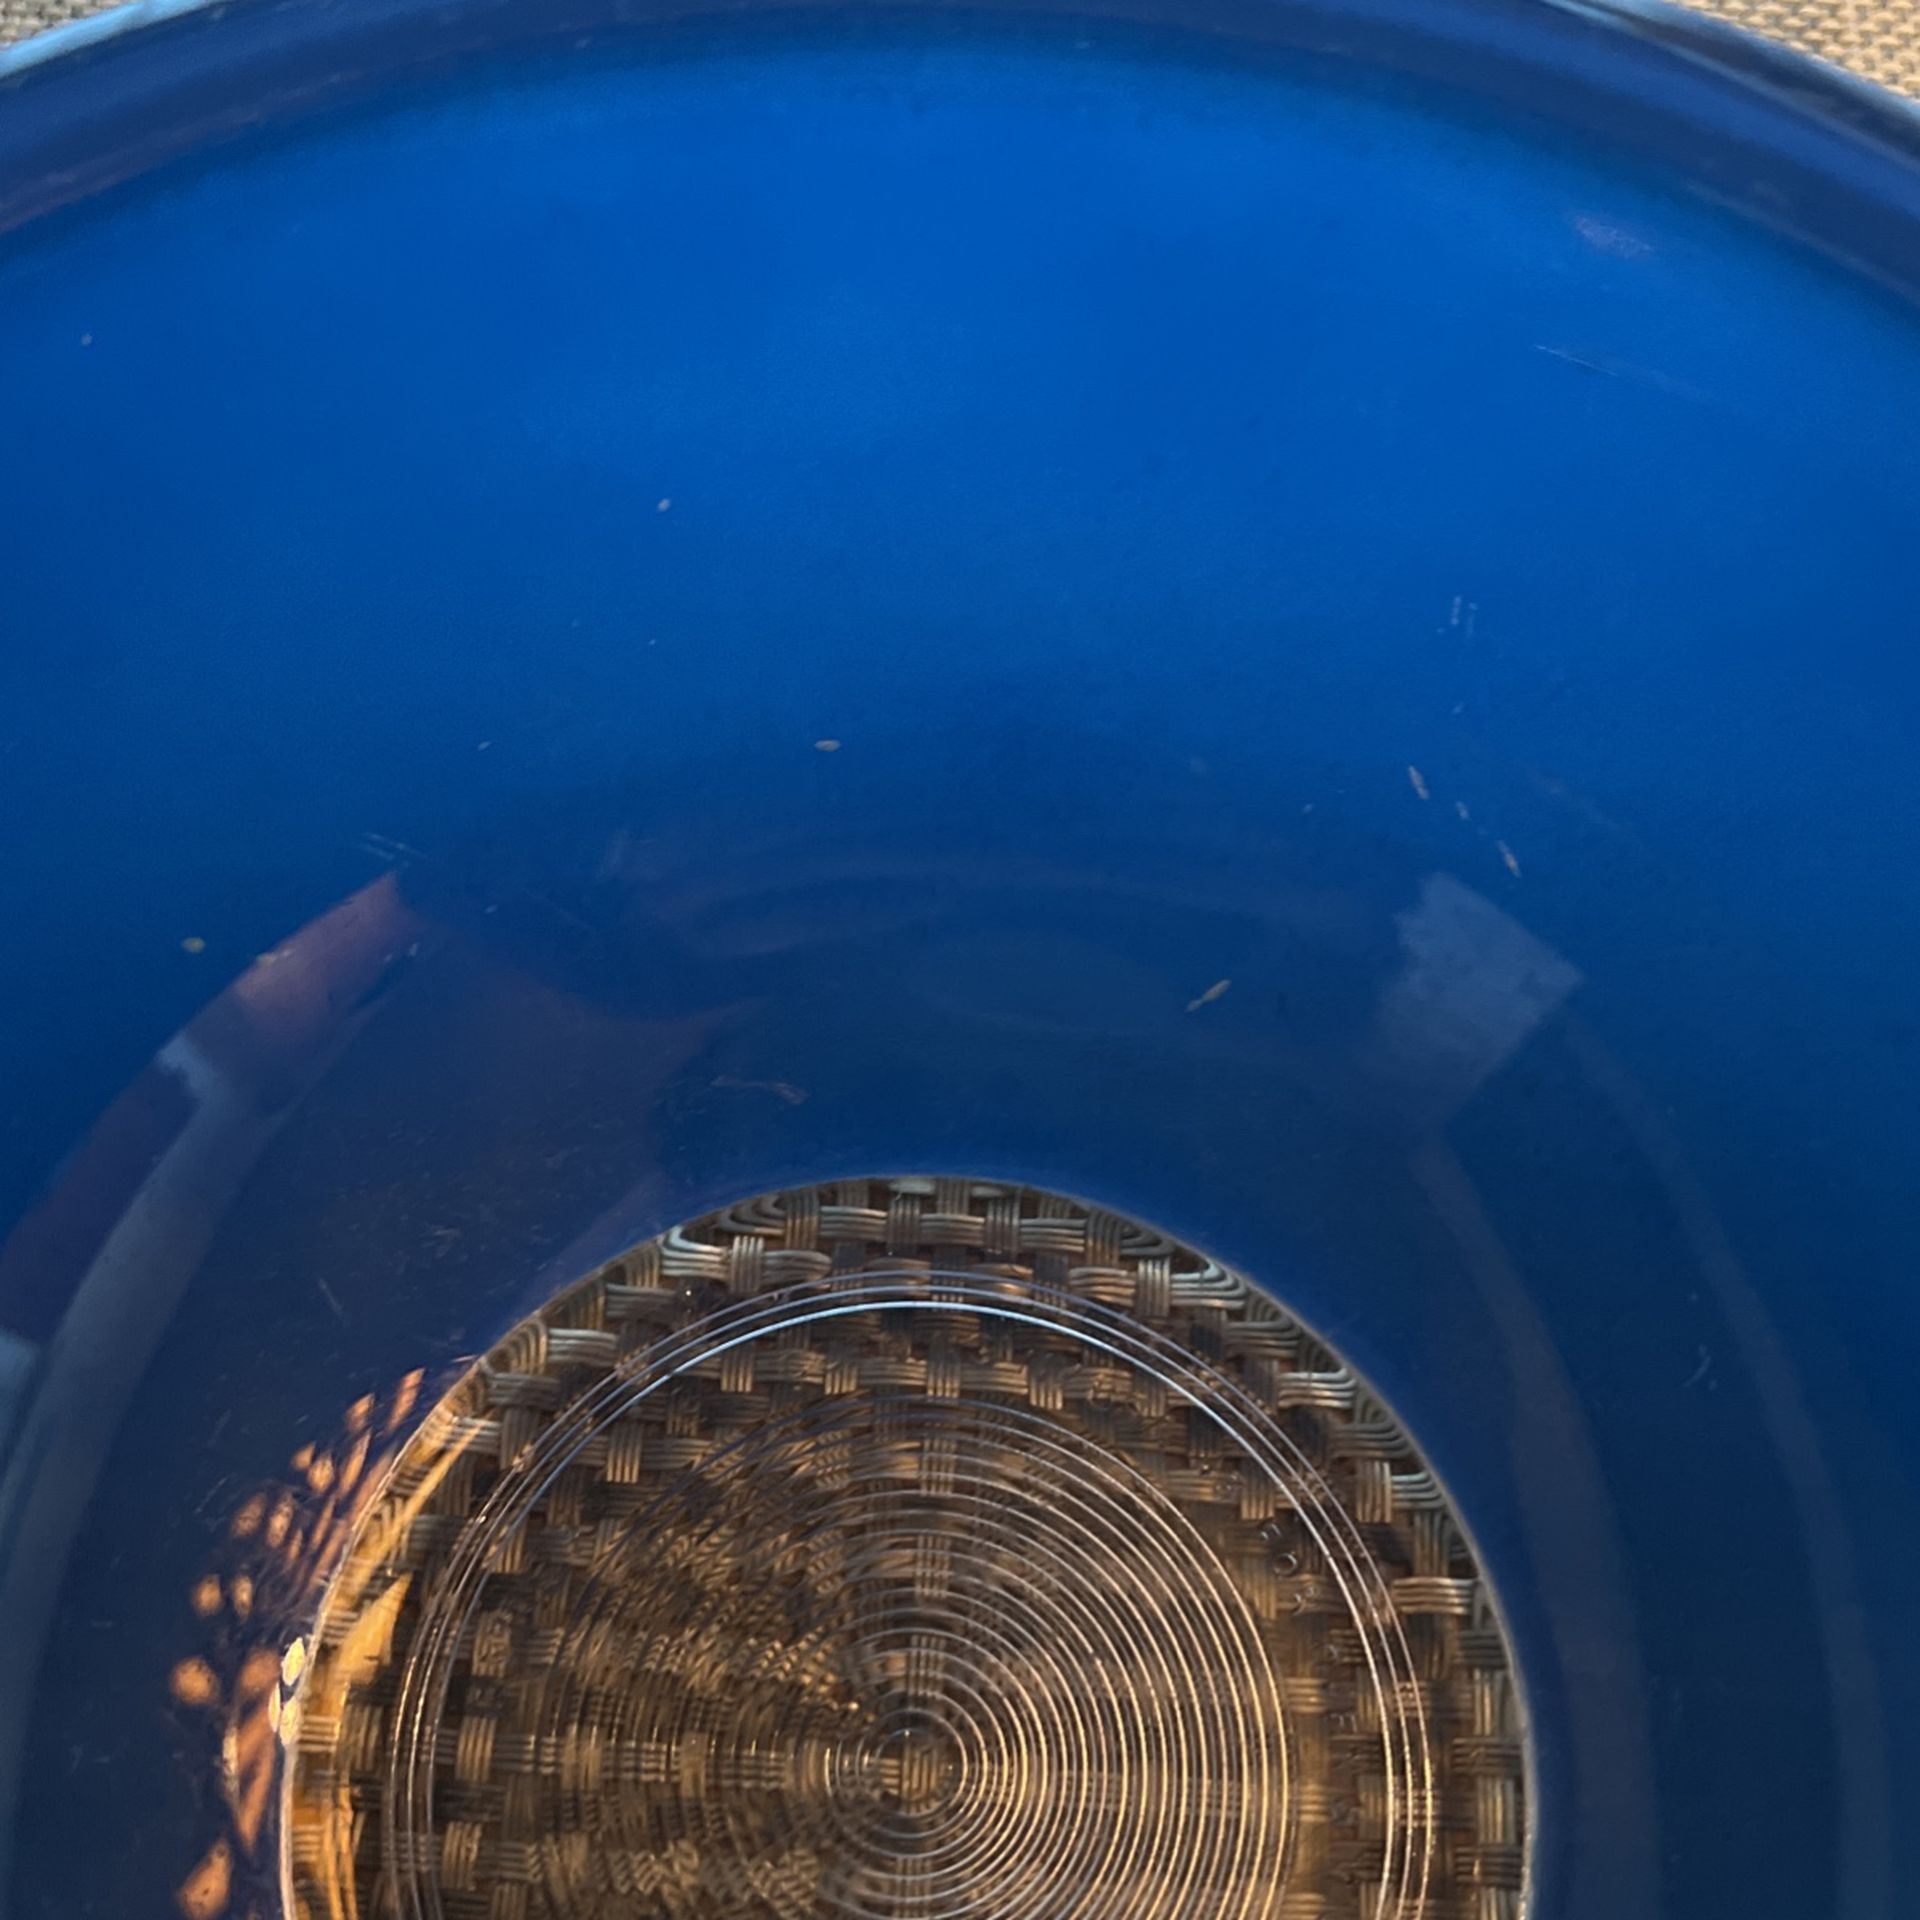 PYREX Vintage 4 Cup 1 Quart 1 Liter Large Clear/Blue Measuring Cup Bowl for  Sale in Fort Lauderdale, FL - OfferUp